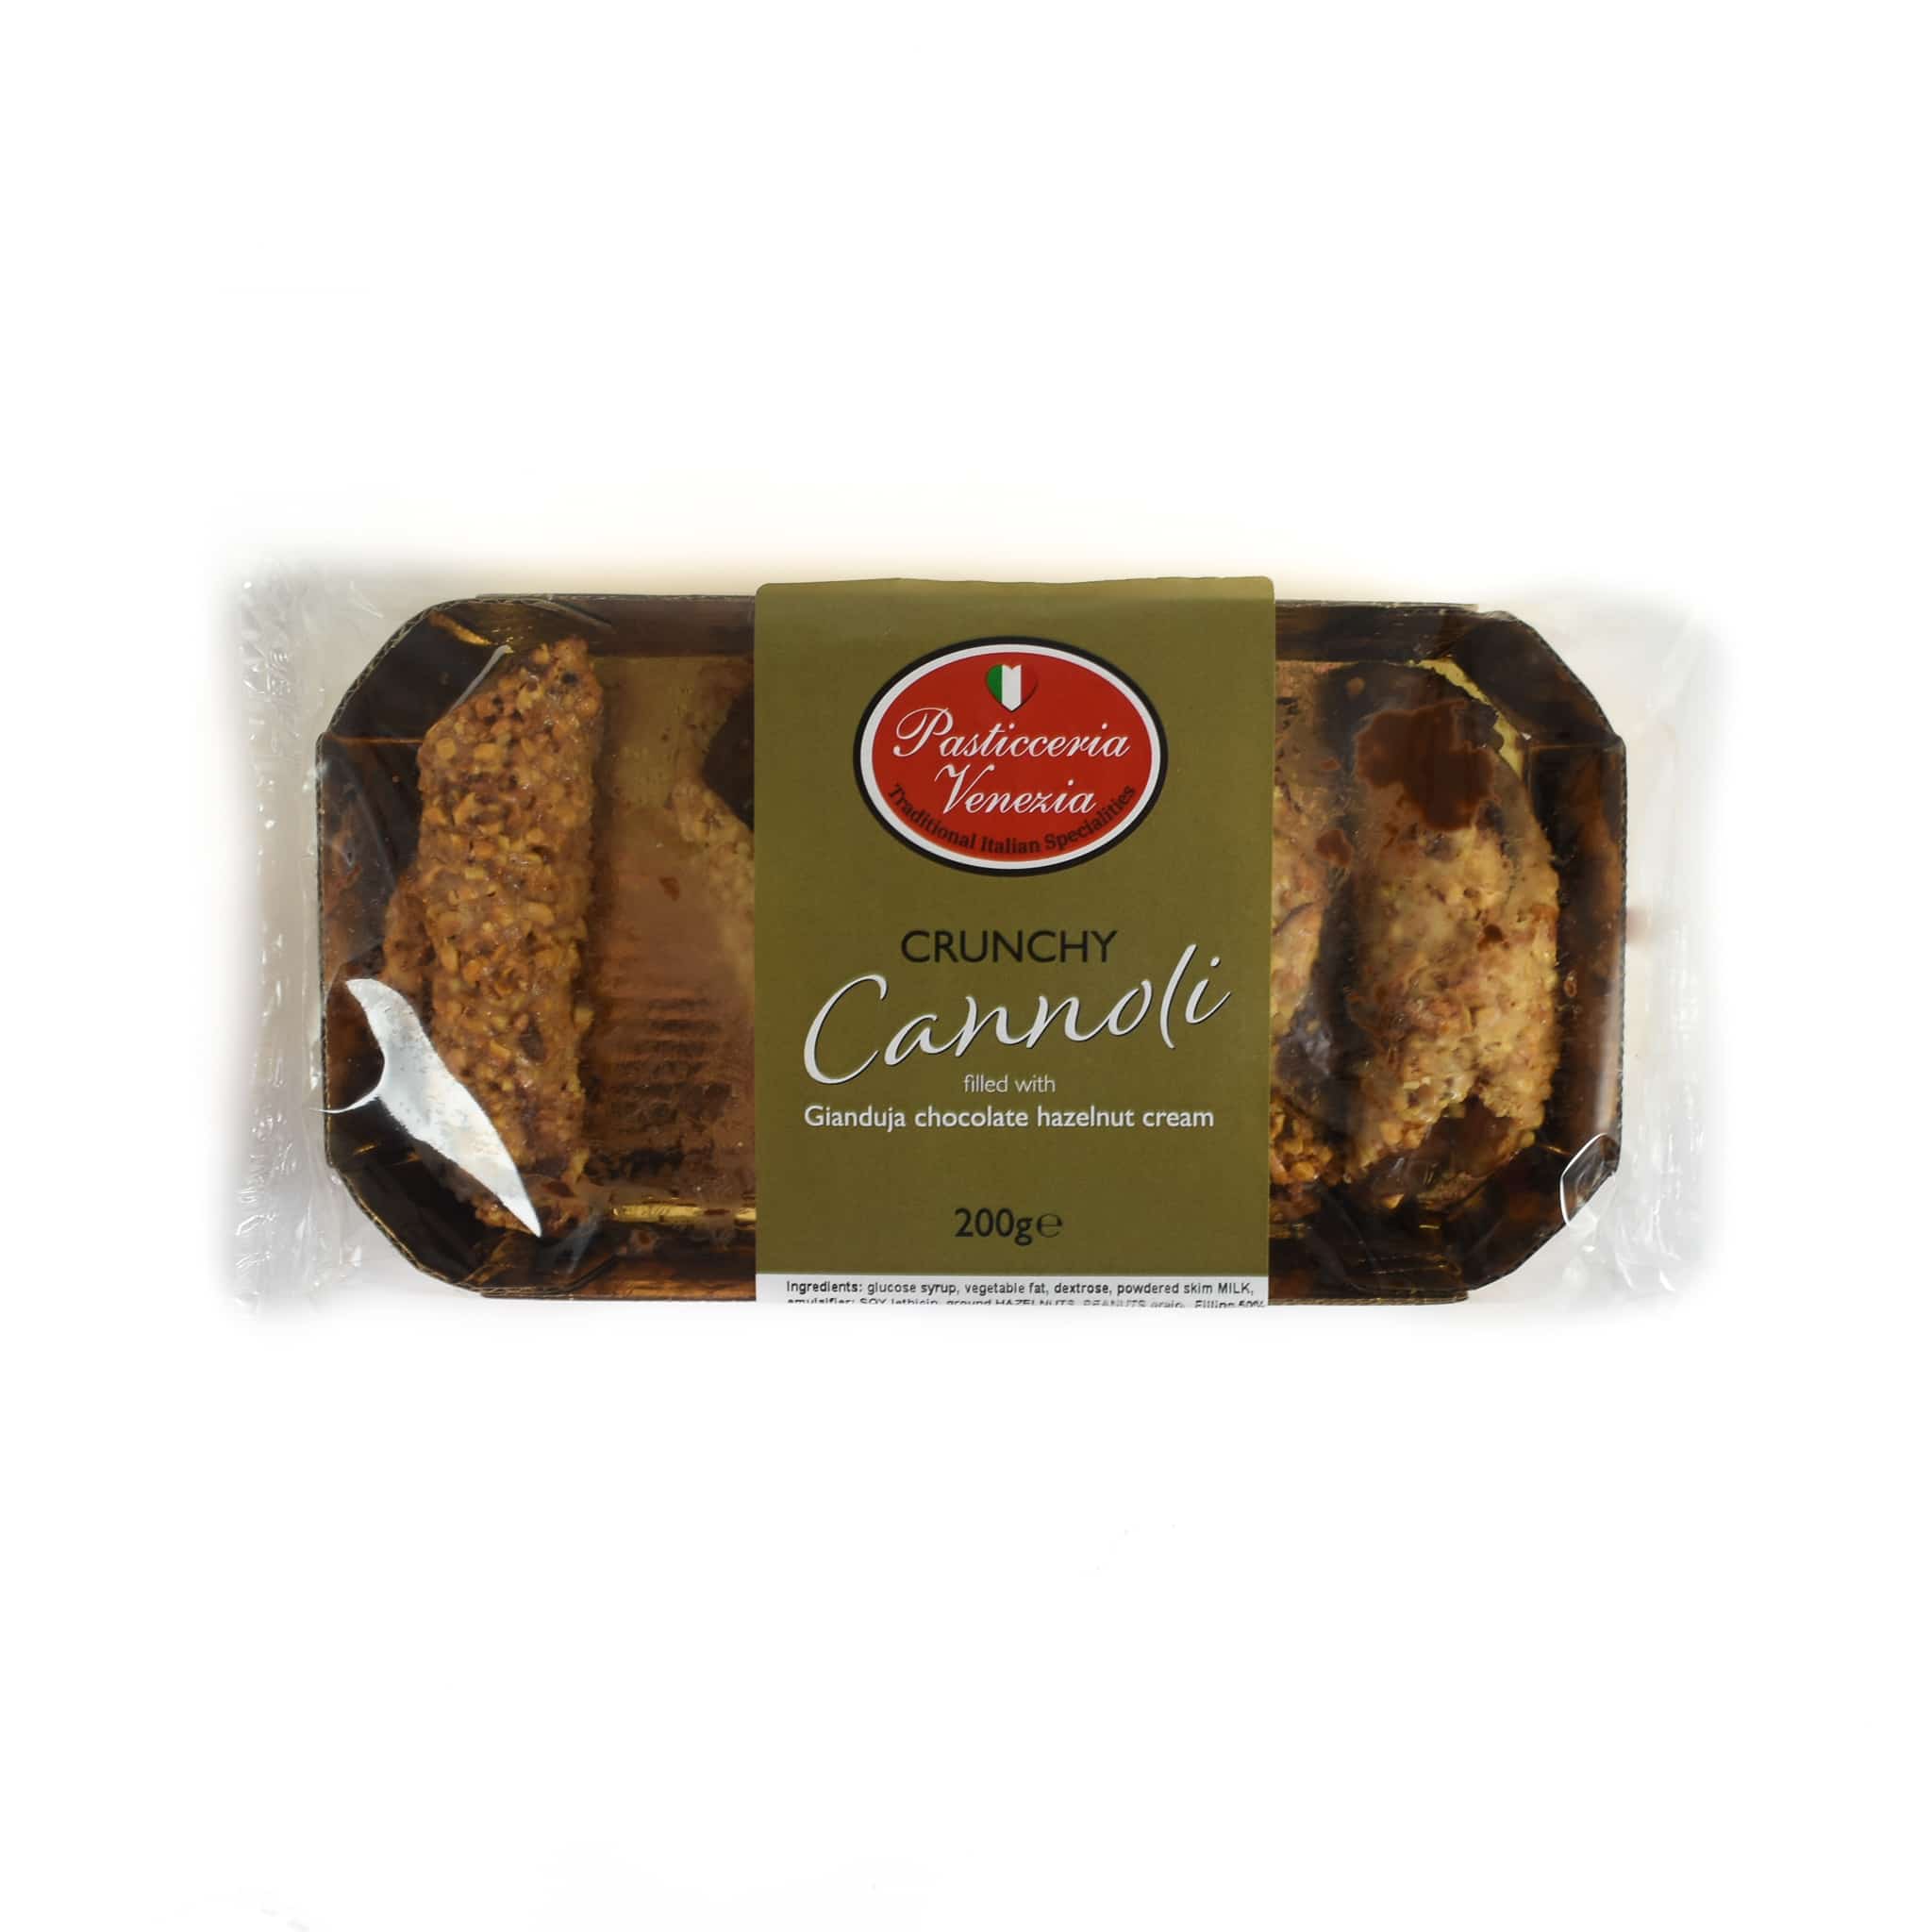 Crunchy Cannoli with Gianduja Cream, 200g